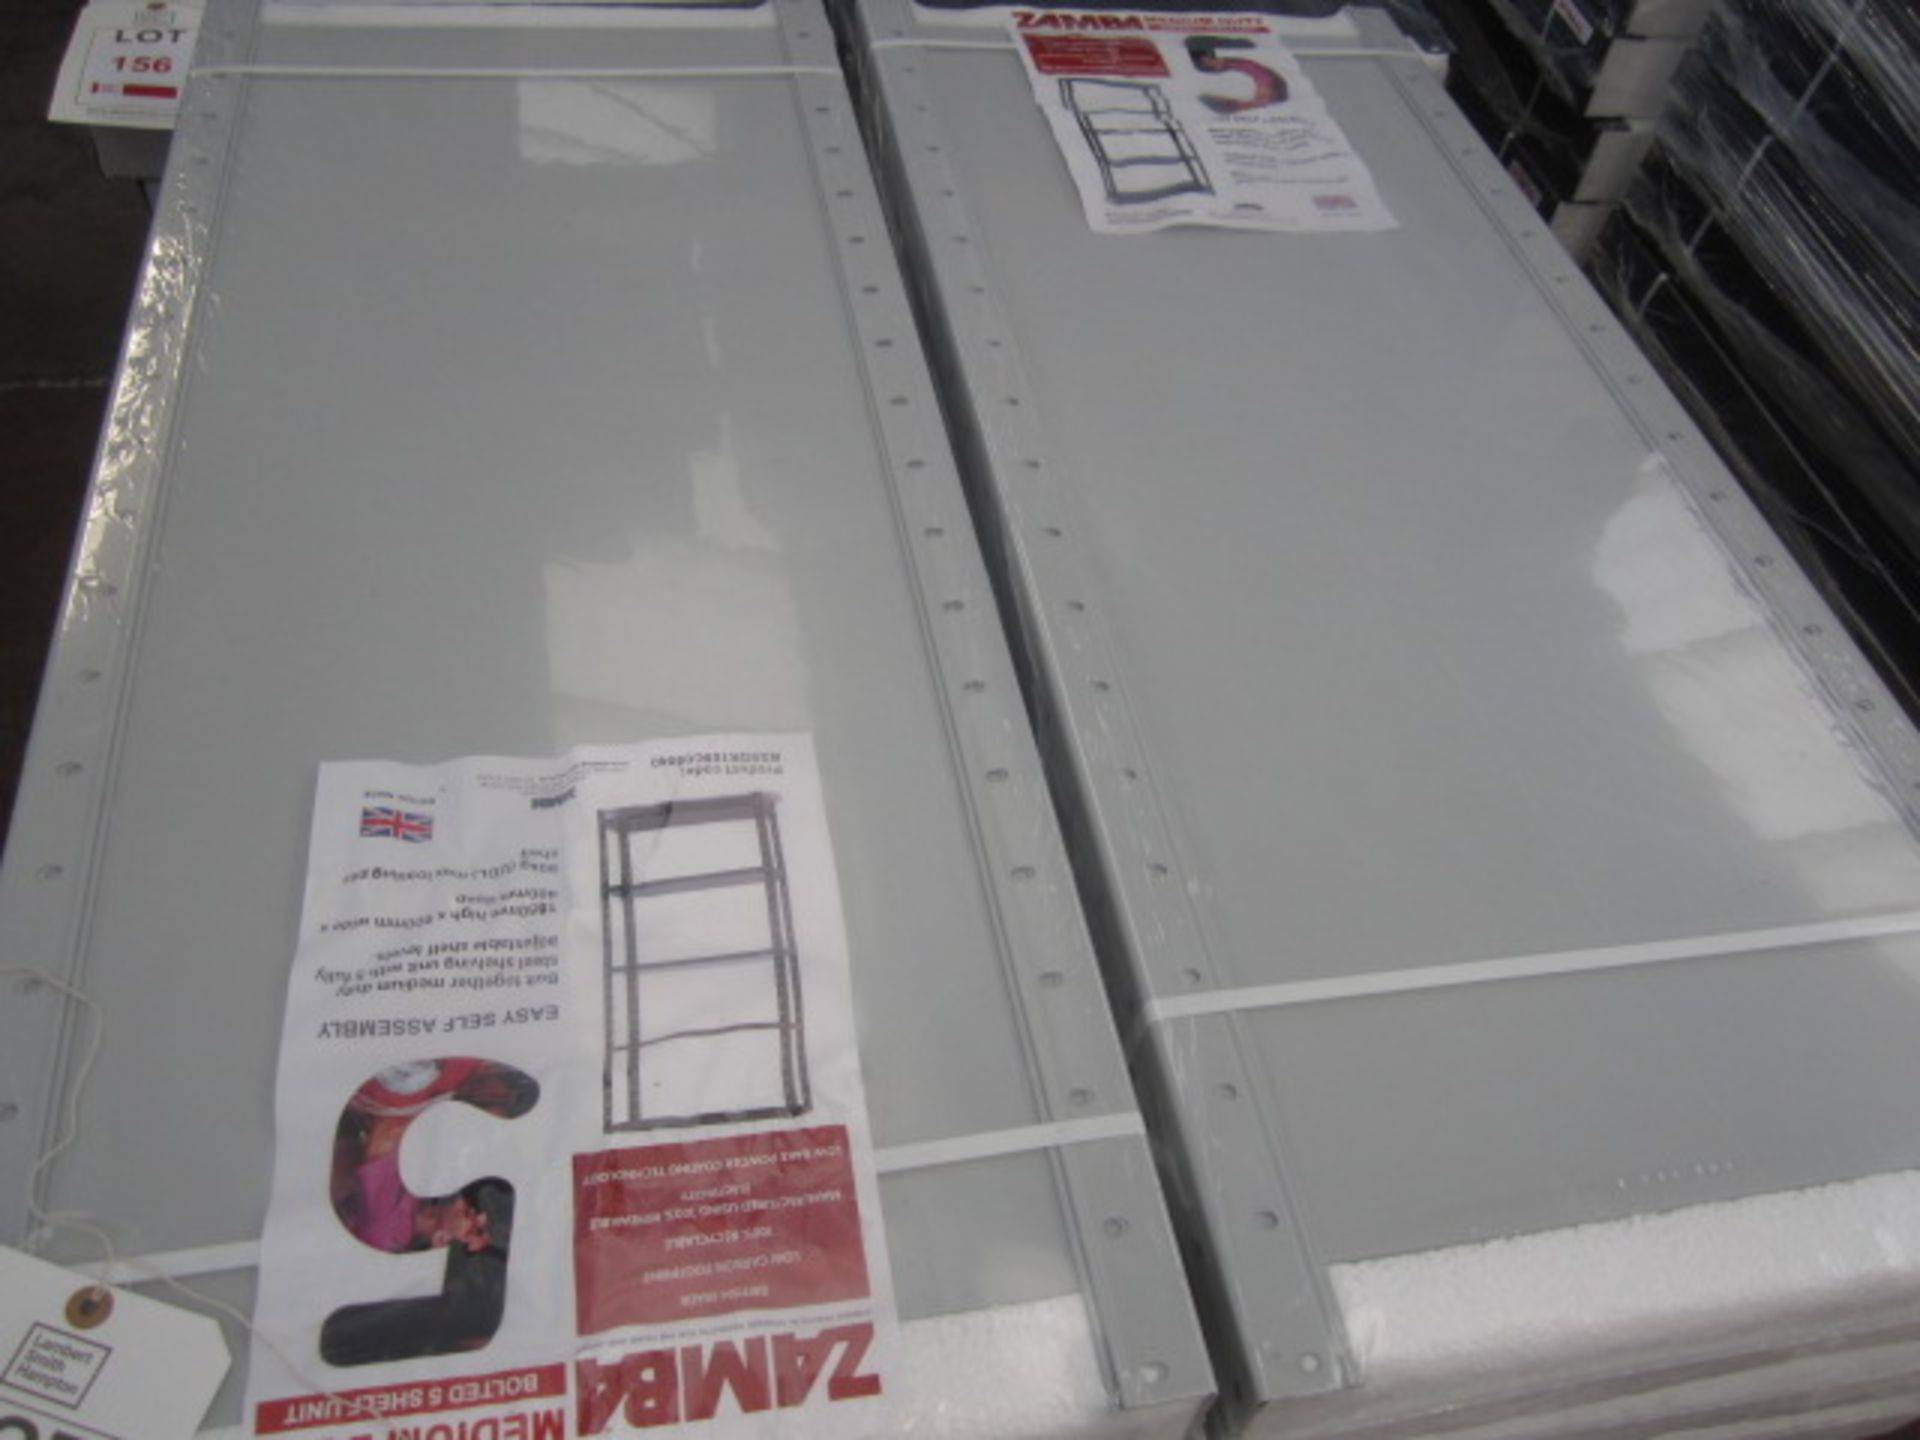 4 x packs Zamba medium duty bolted 5 shelf unit, width: 900mm x depth: 400mm x height: 1850mm